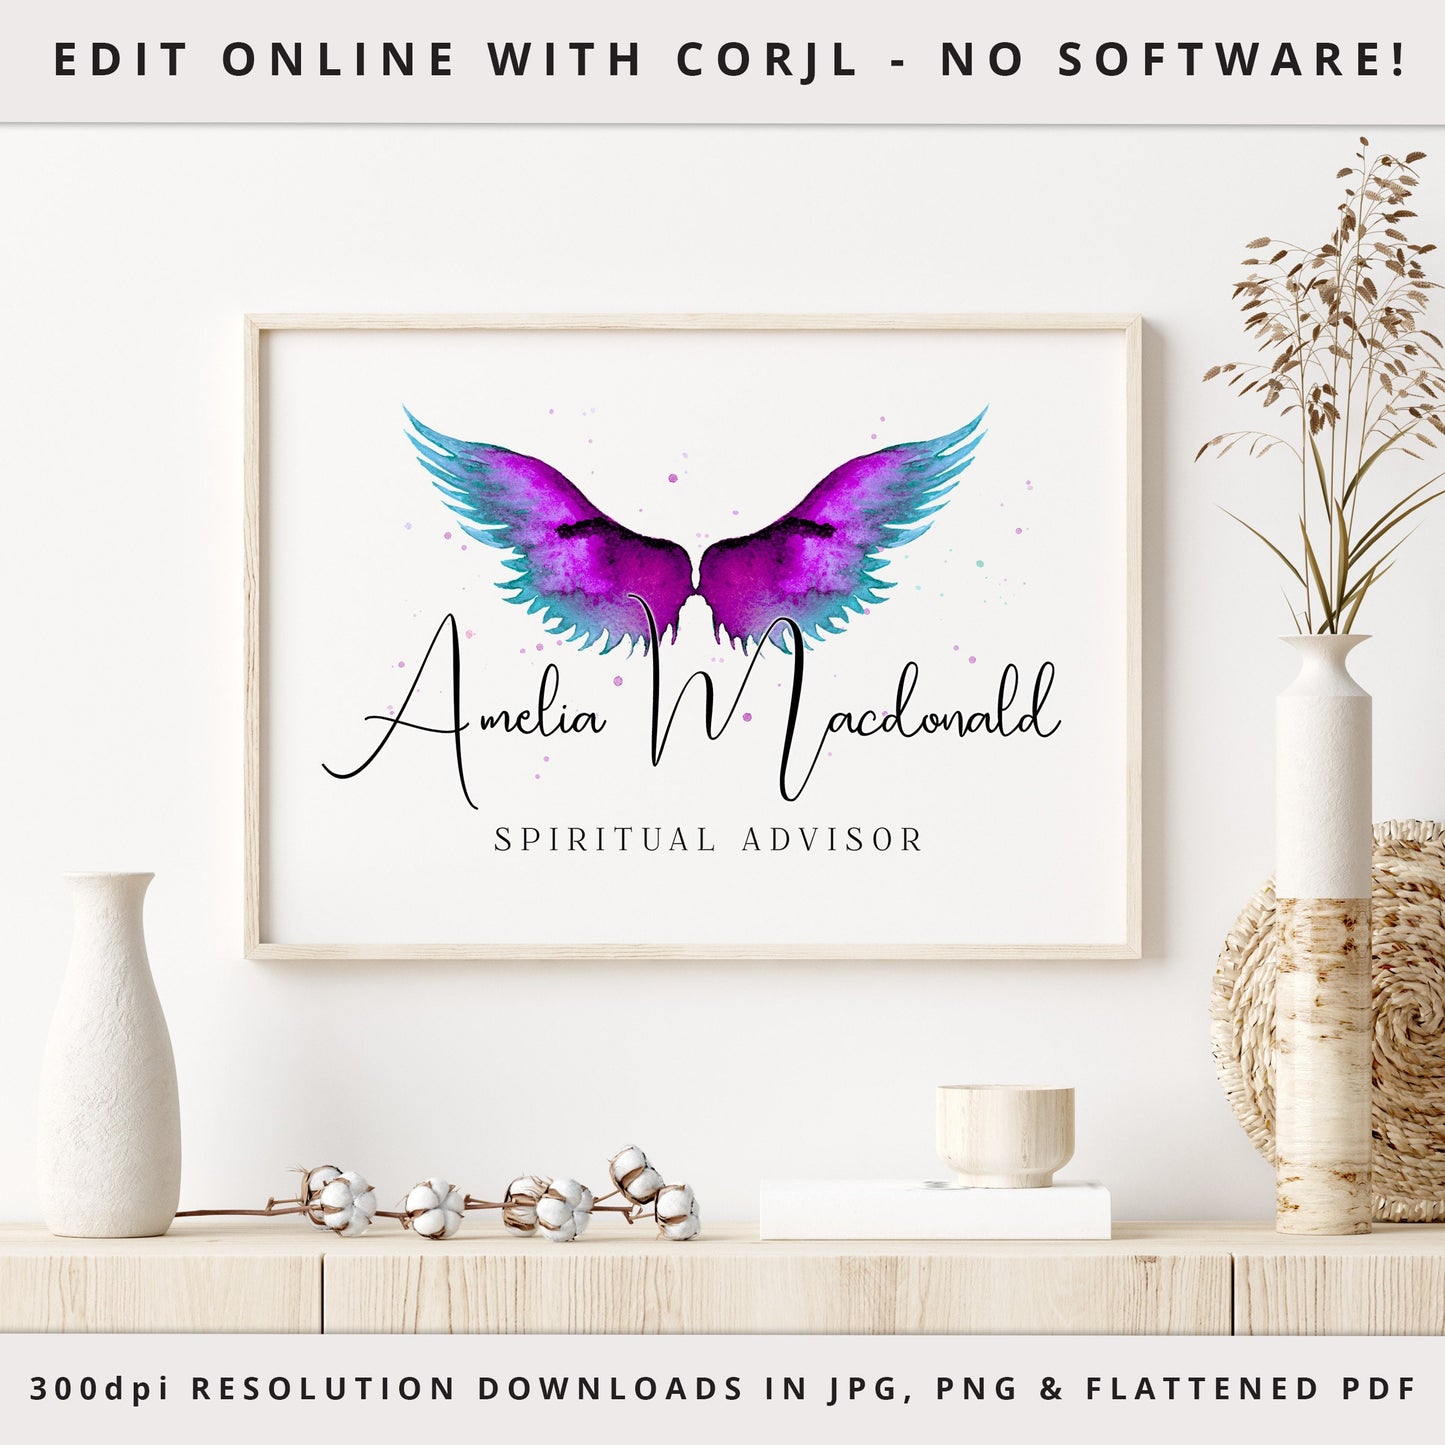 Editable 8pc Branding Kit Ethereal Angel Wings Instant Download Logo Design DIY Template Premade Logo Brand Kit - PR0529